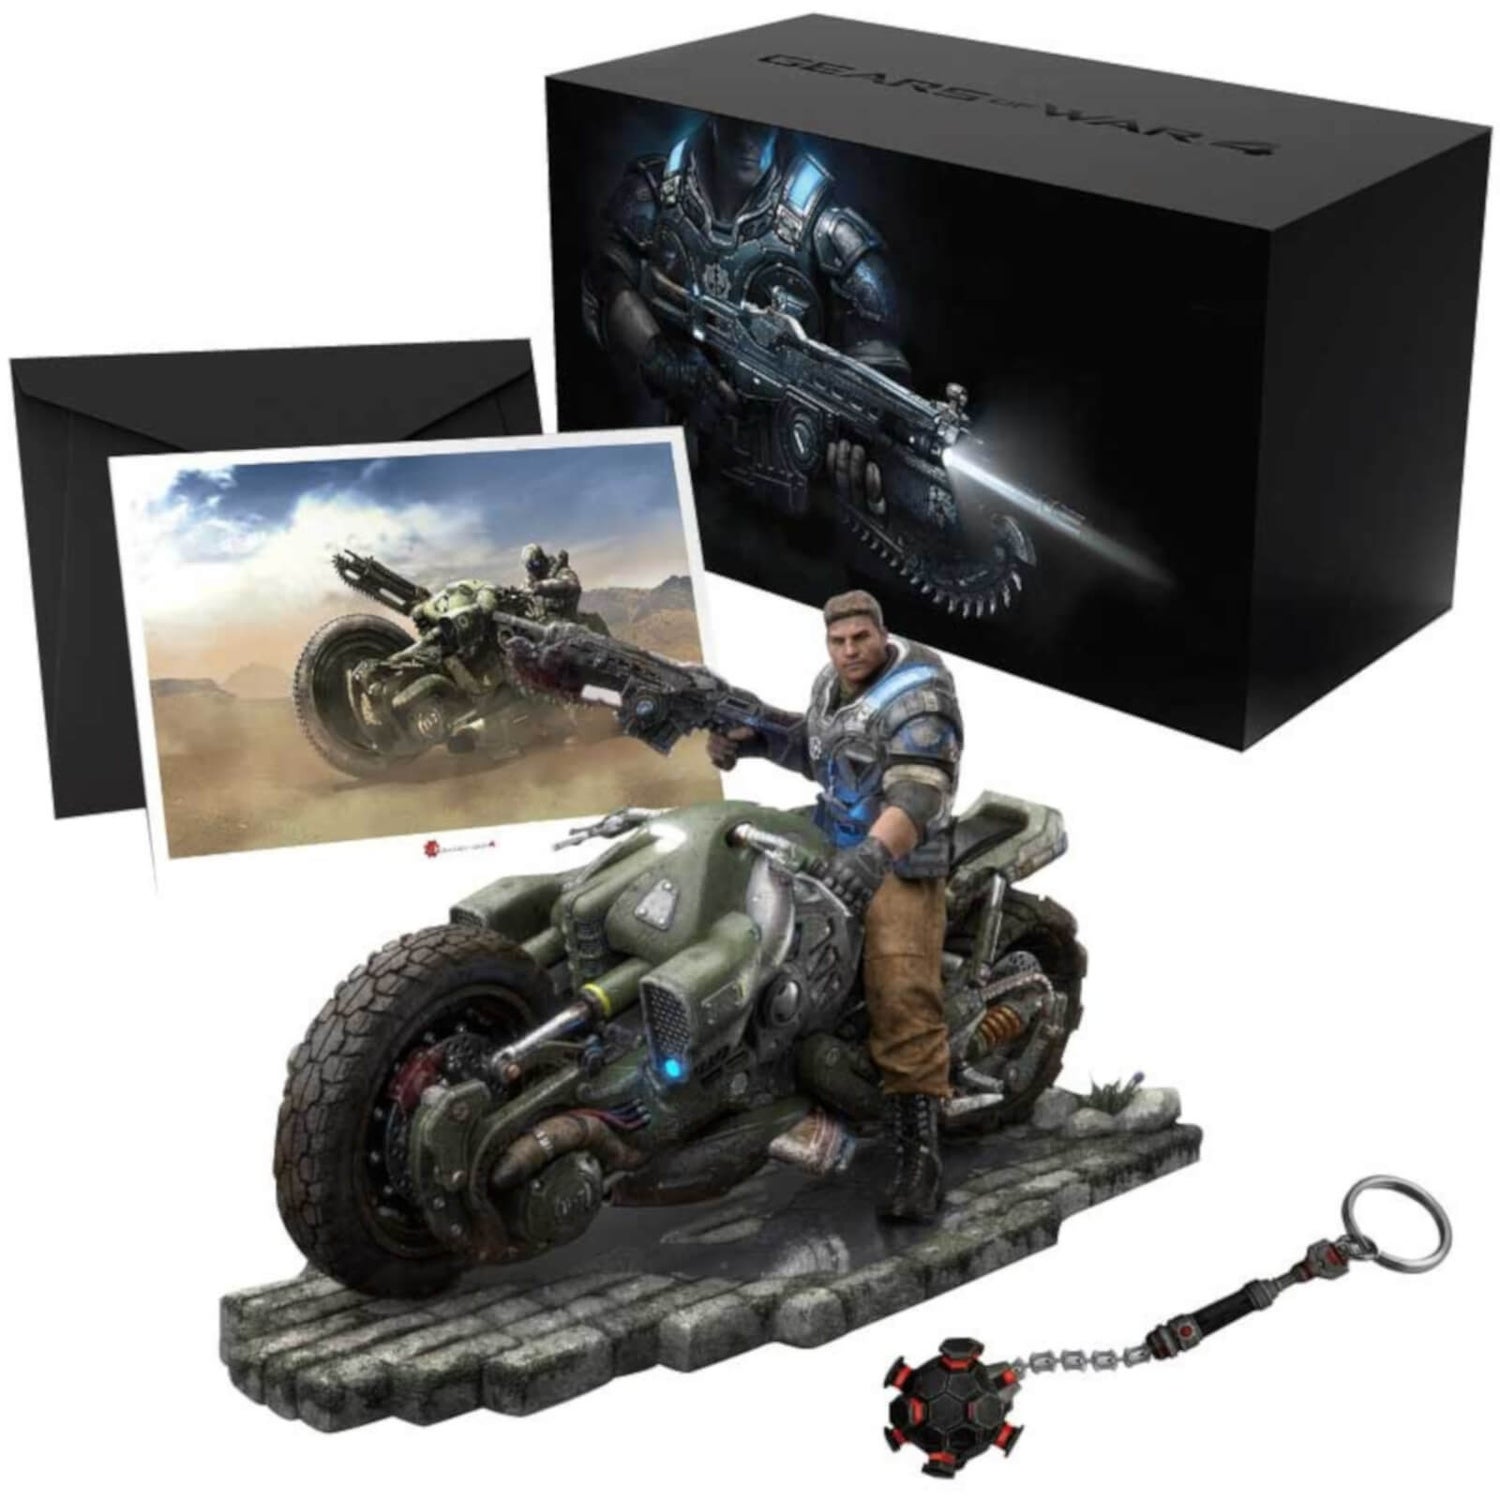 Gears of War 4 Collector's Edition - JD Fenix on COG Bike Premium Statue - 28cm